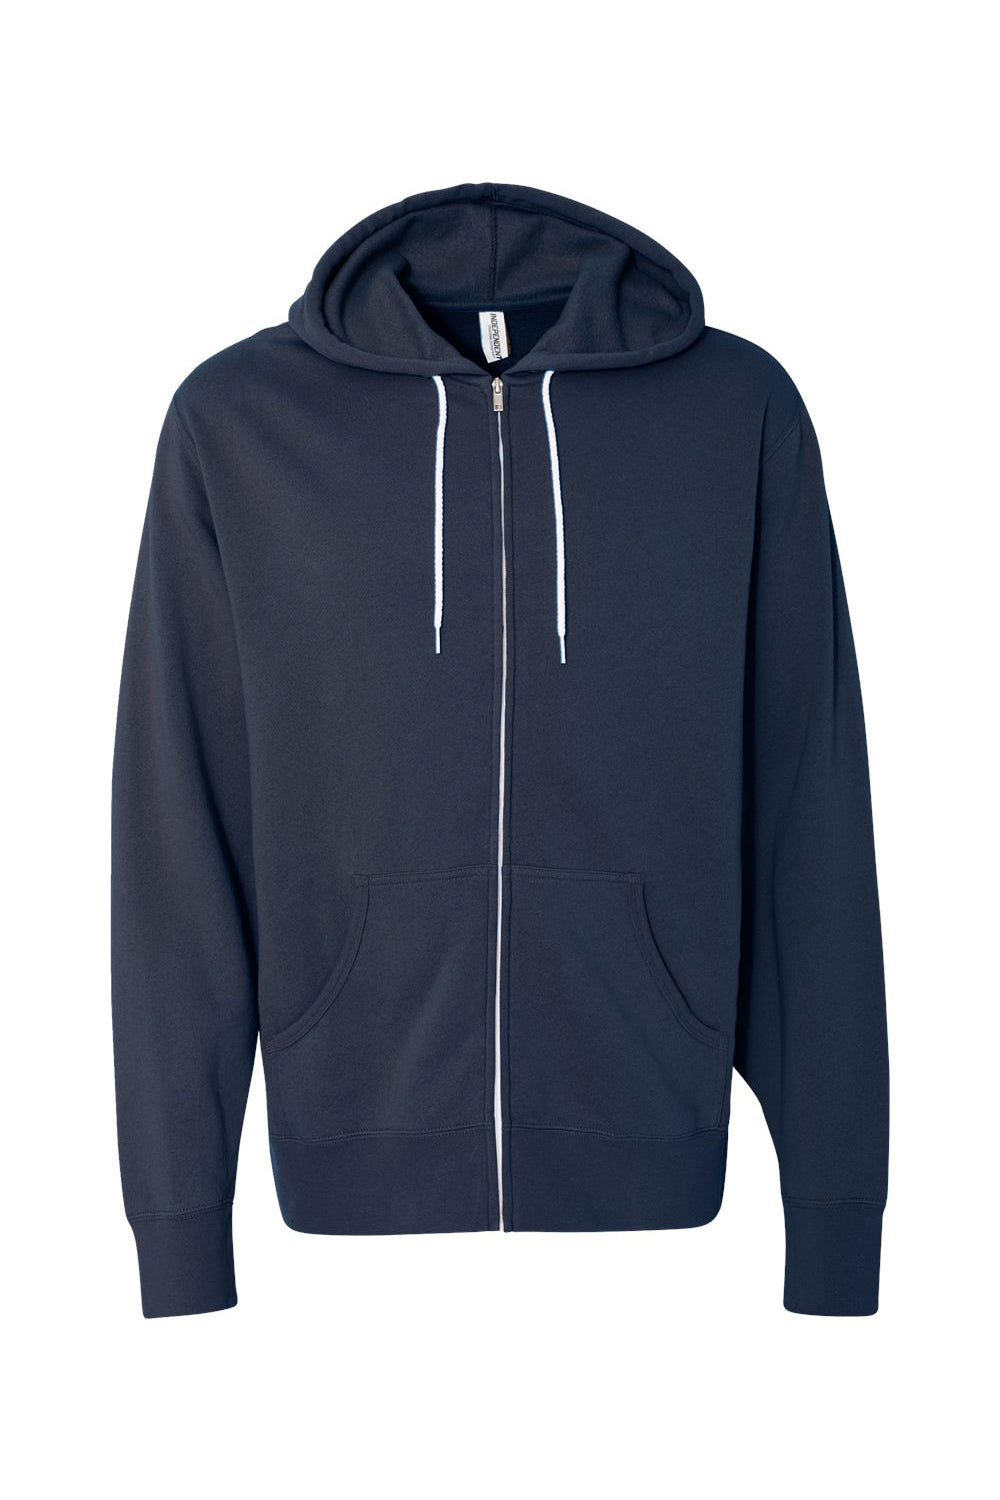 Independent Trading Co. AFX90UNZ Mens Full Zip Hooded Sweatshirt Hoodie Slate Blue Flat Front